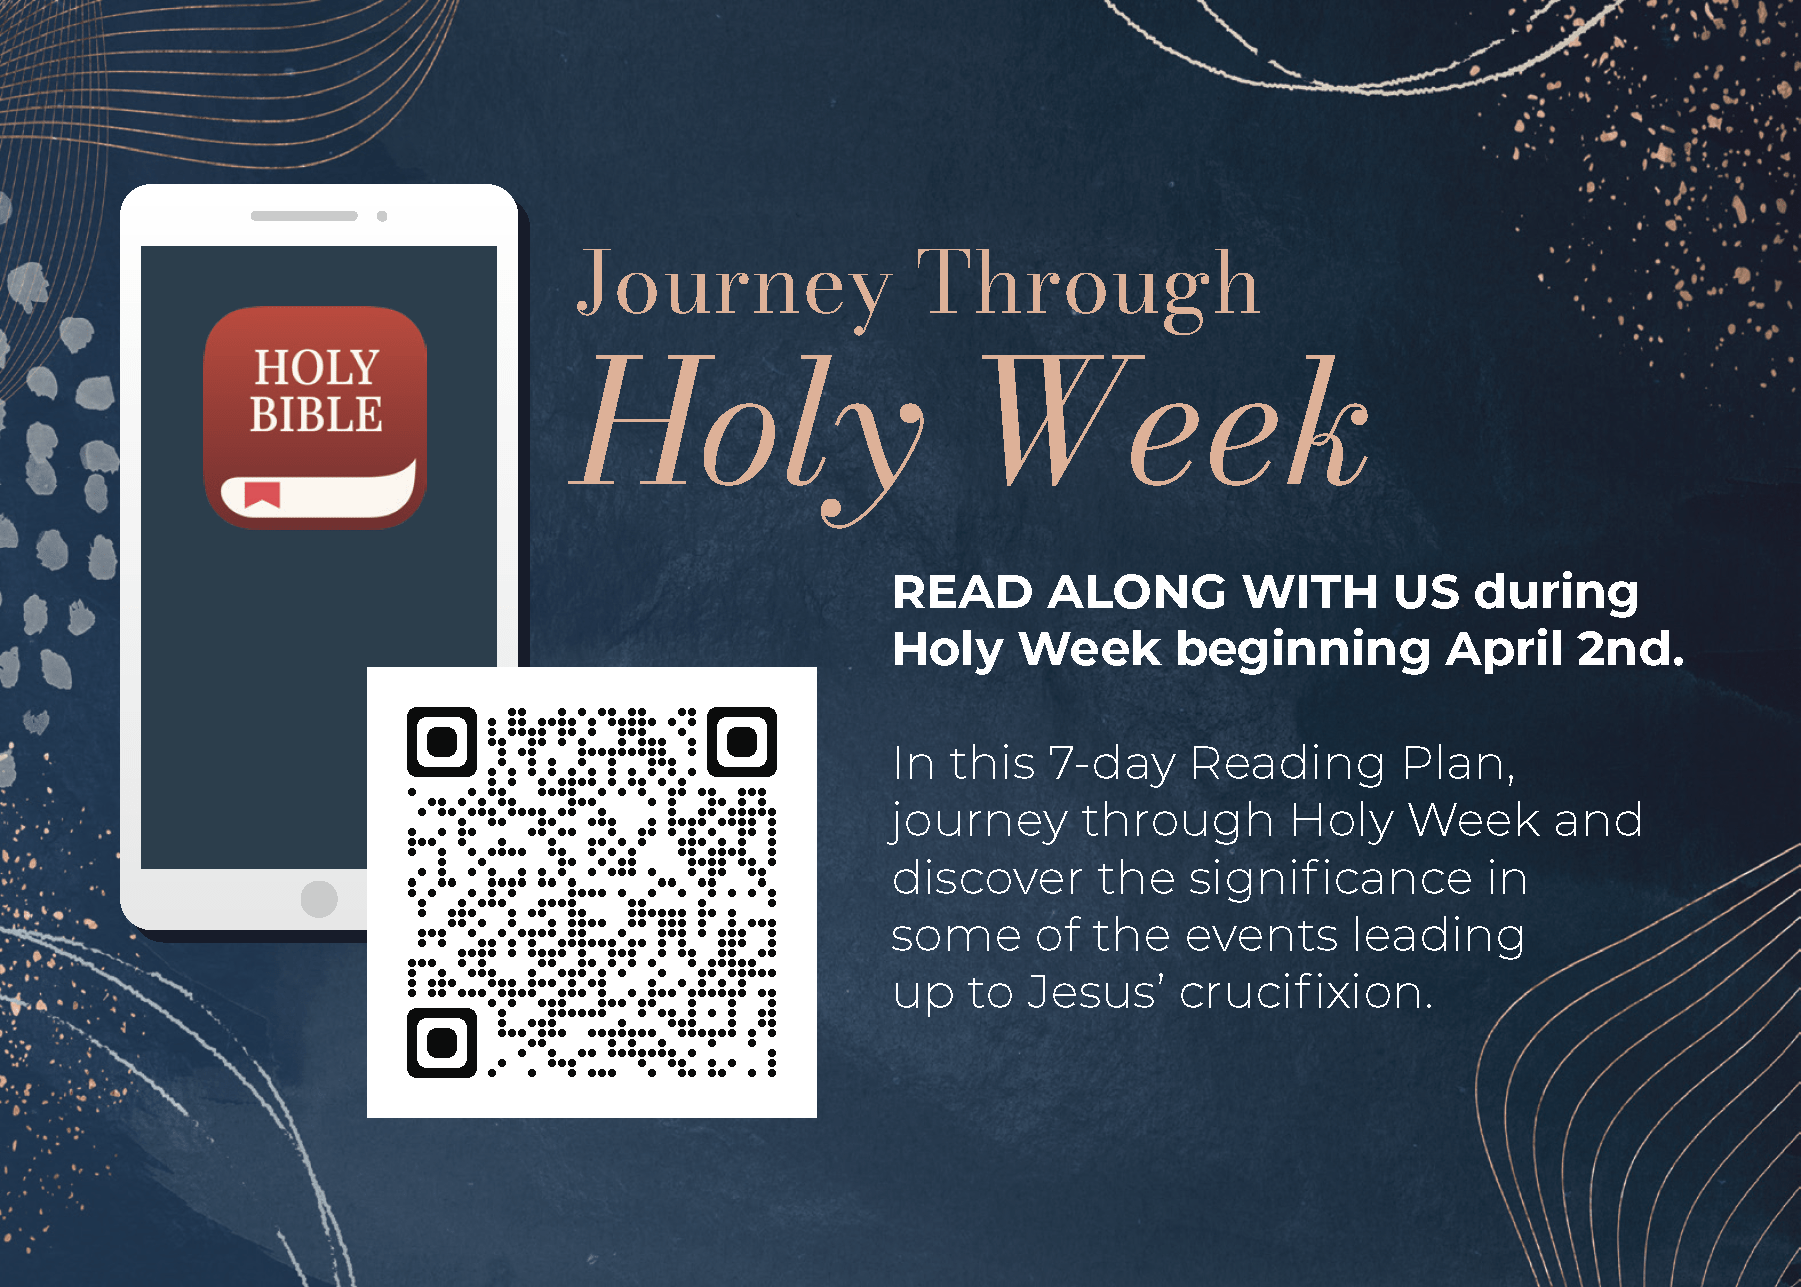 Journey Through Holy Week